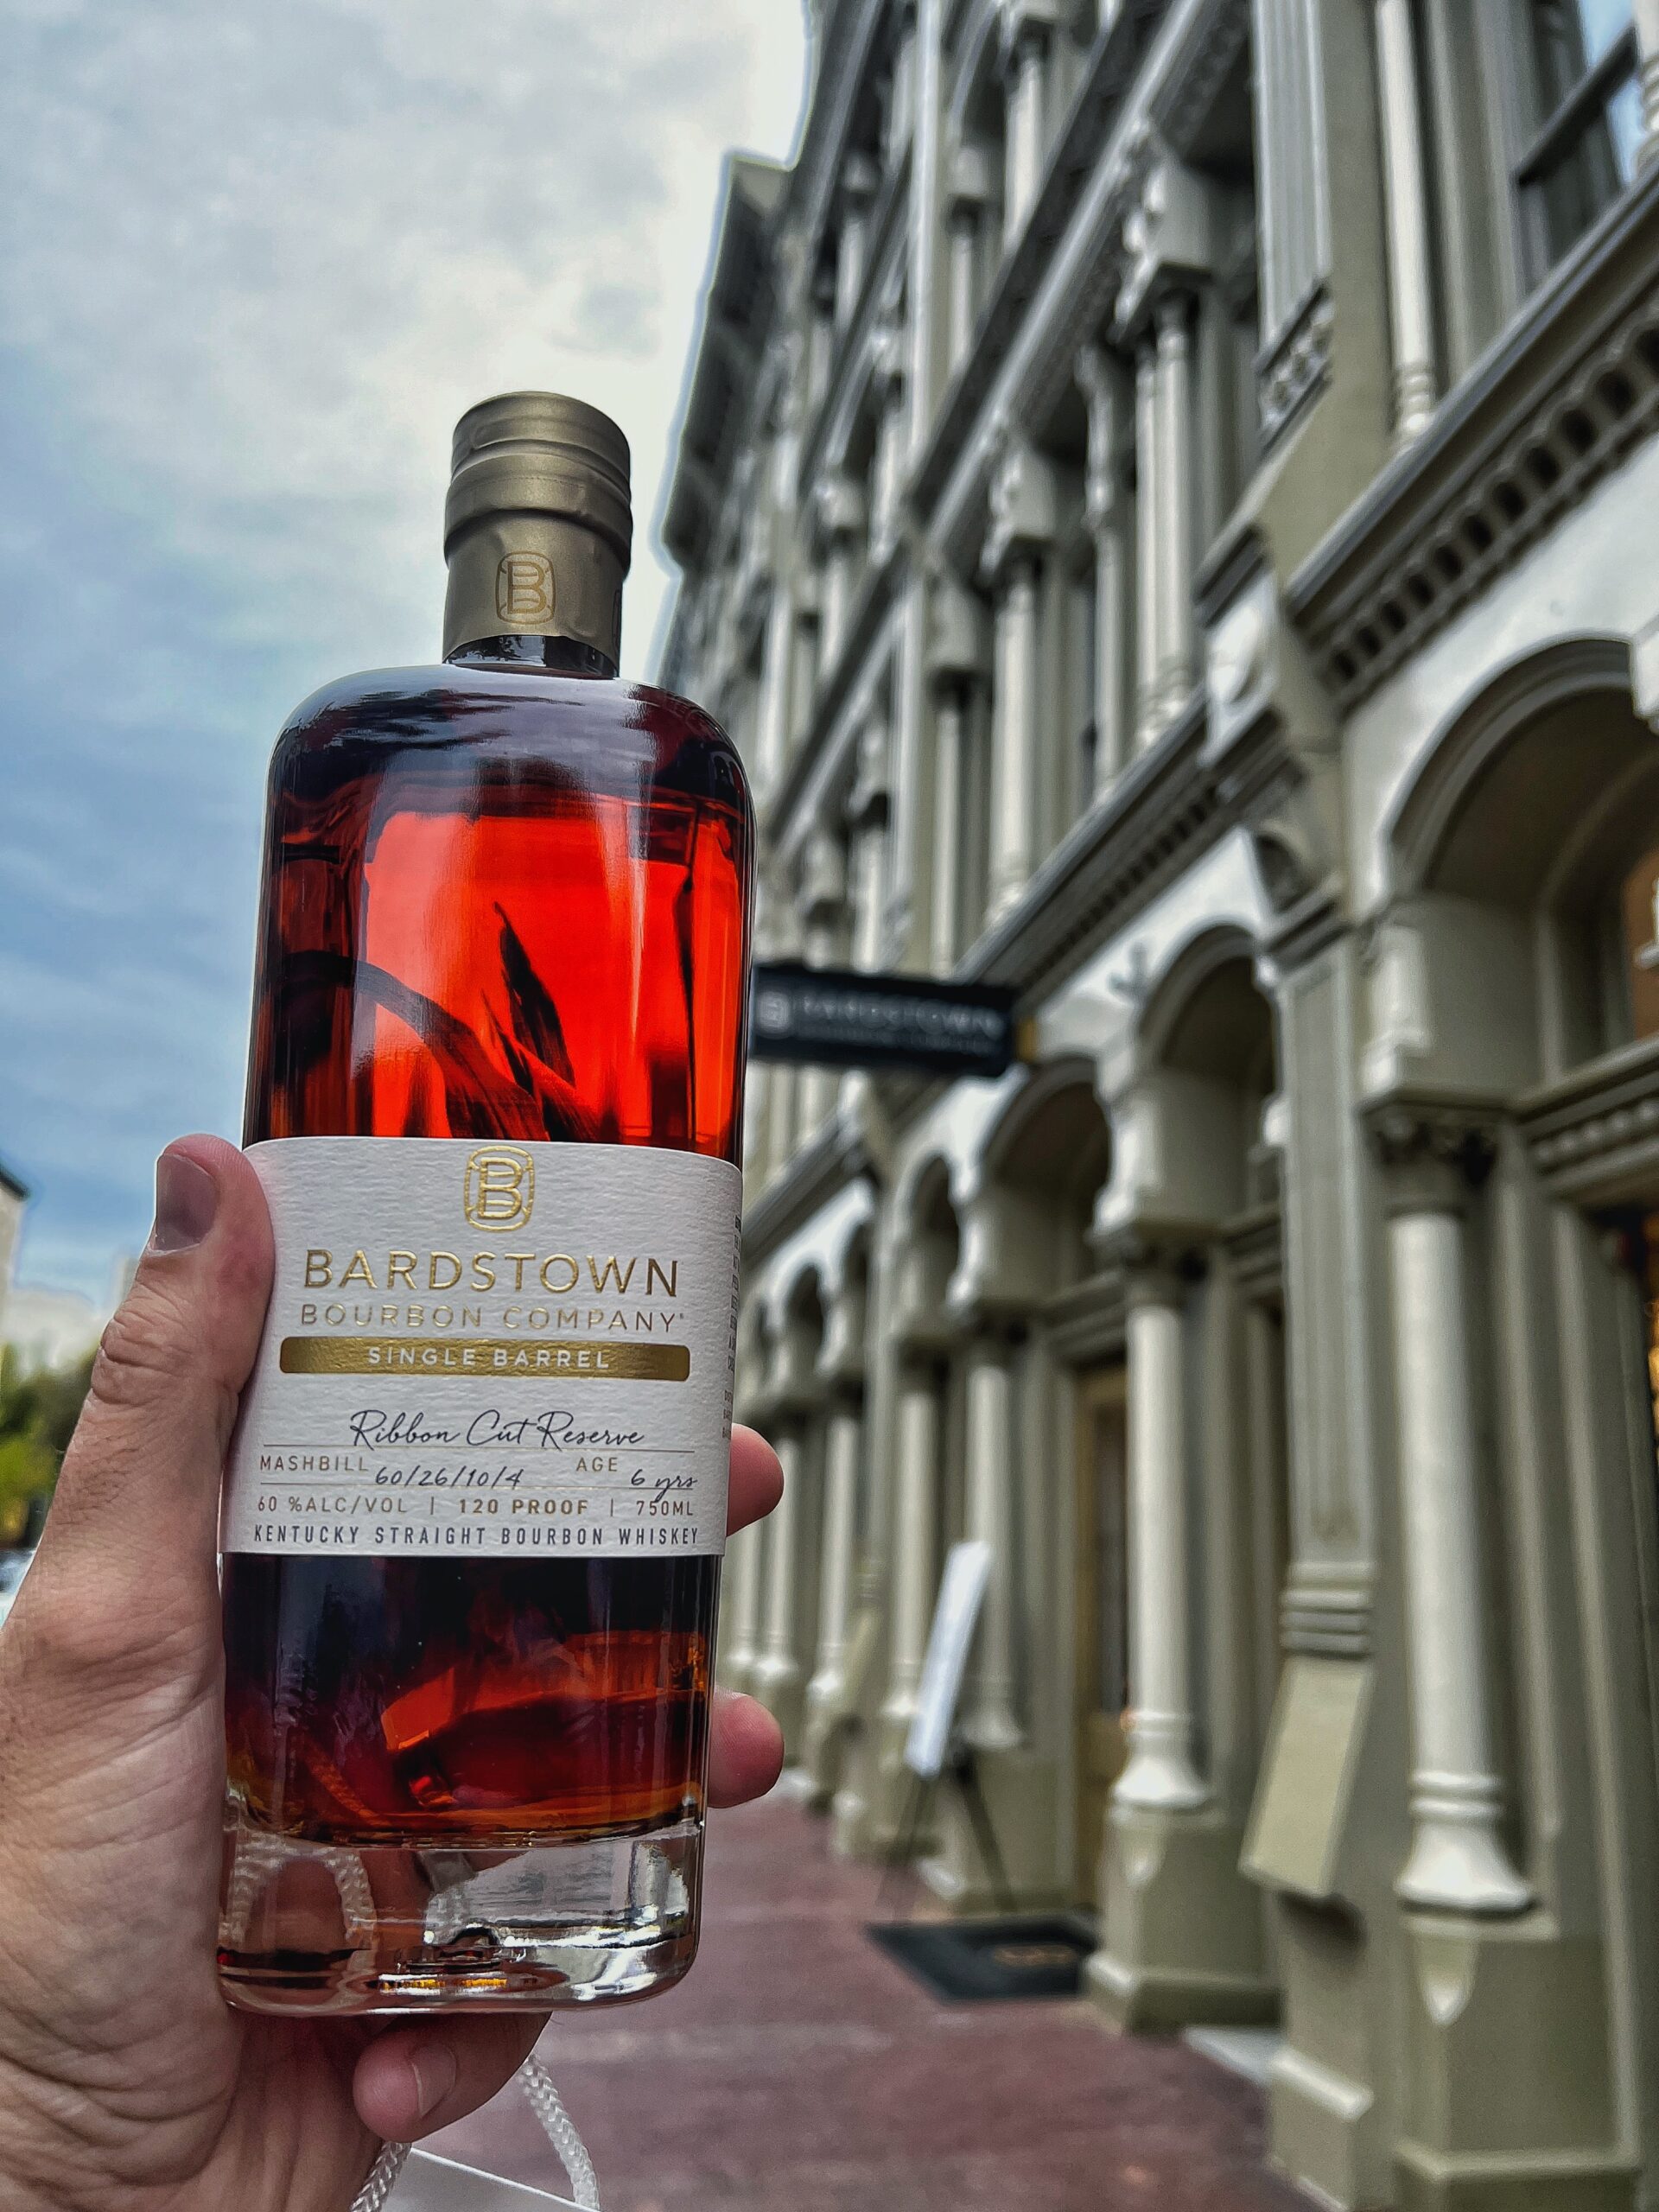 Bardstown Bourbon Company Opens Doors of New Louisville Location